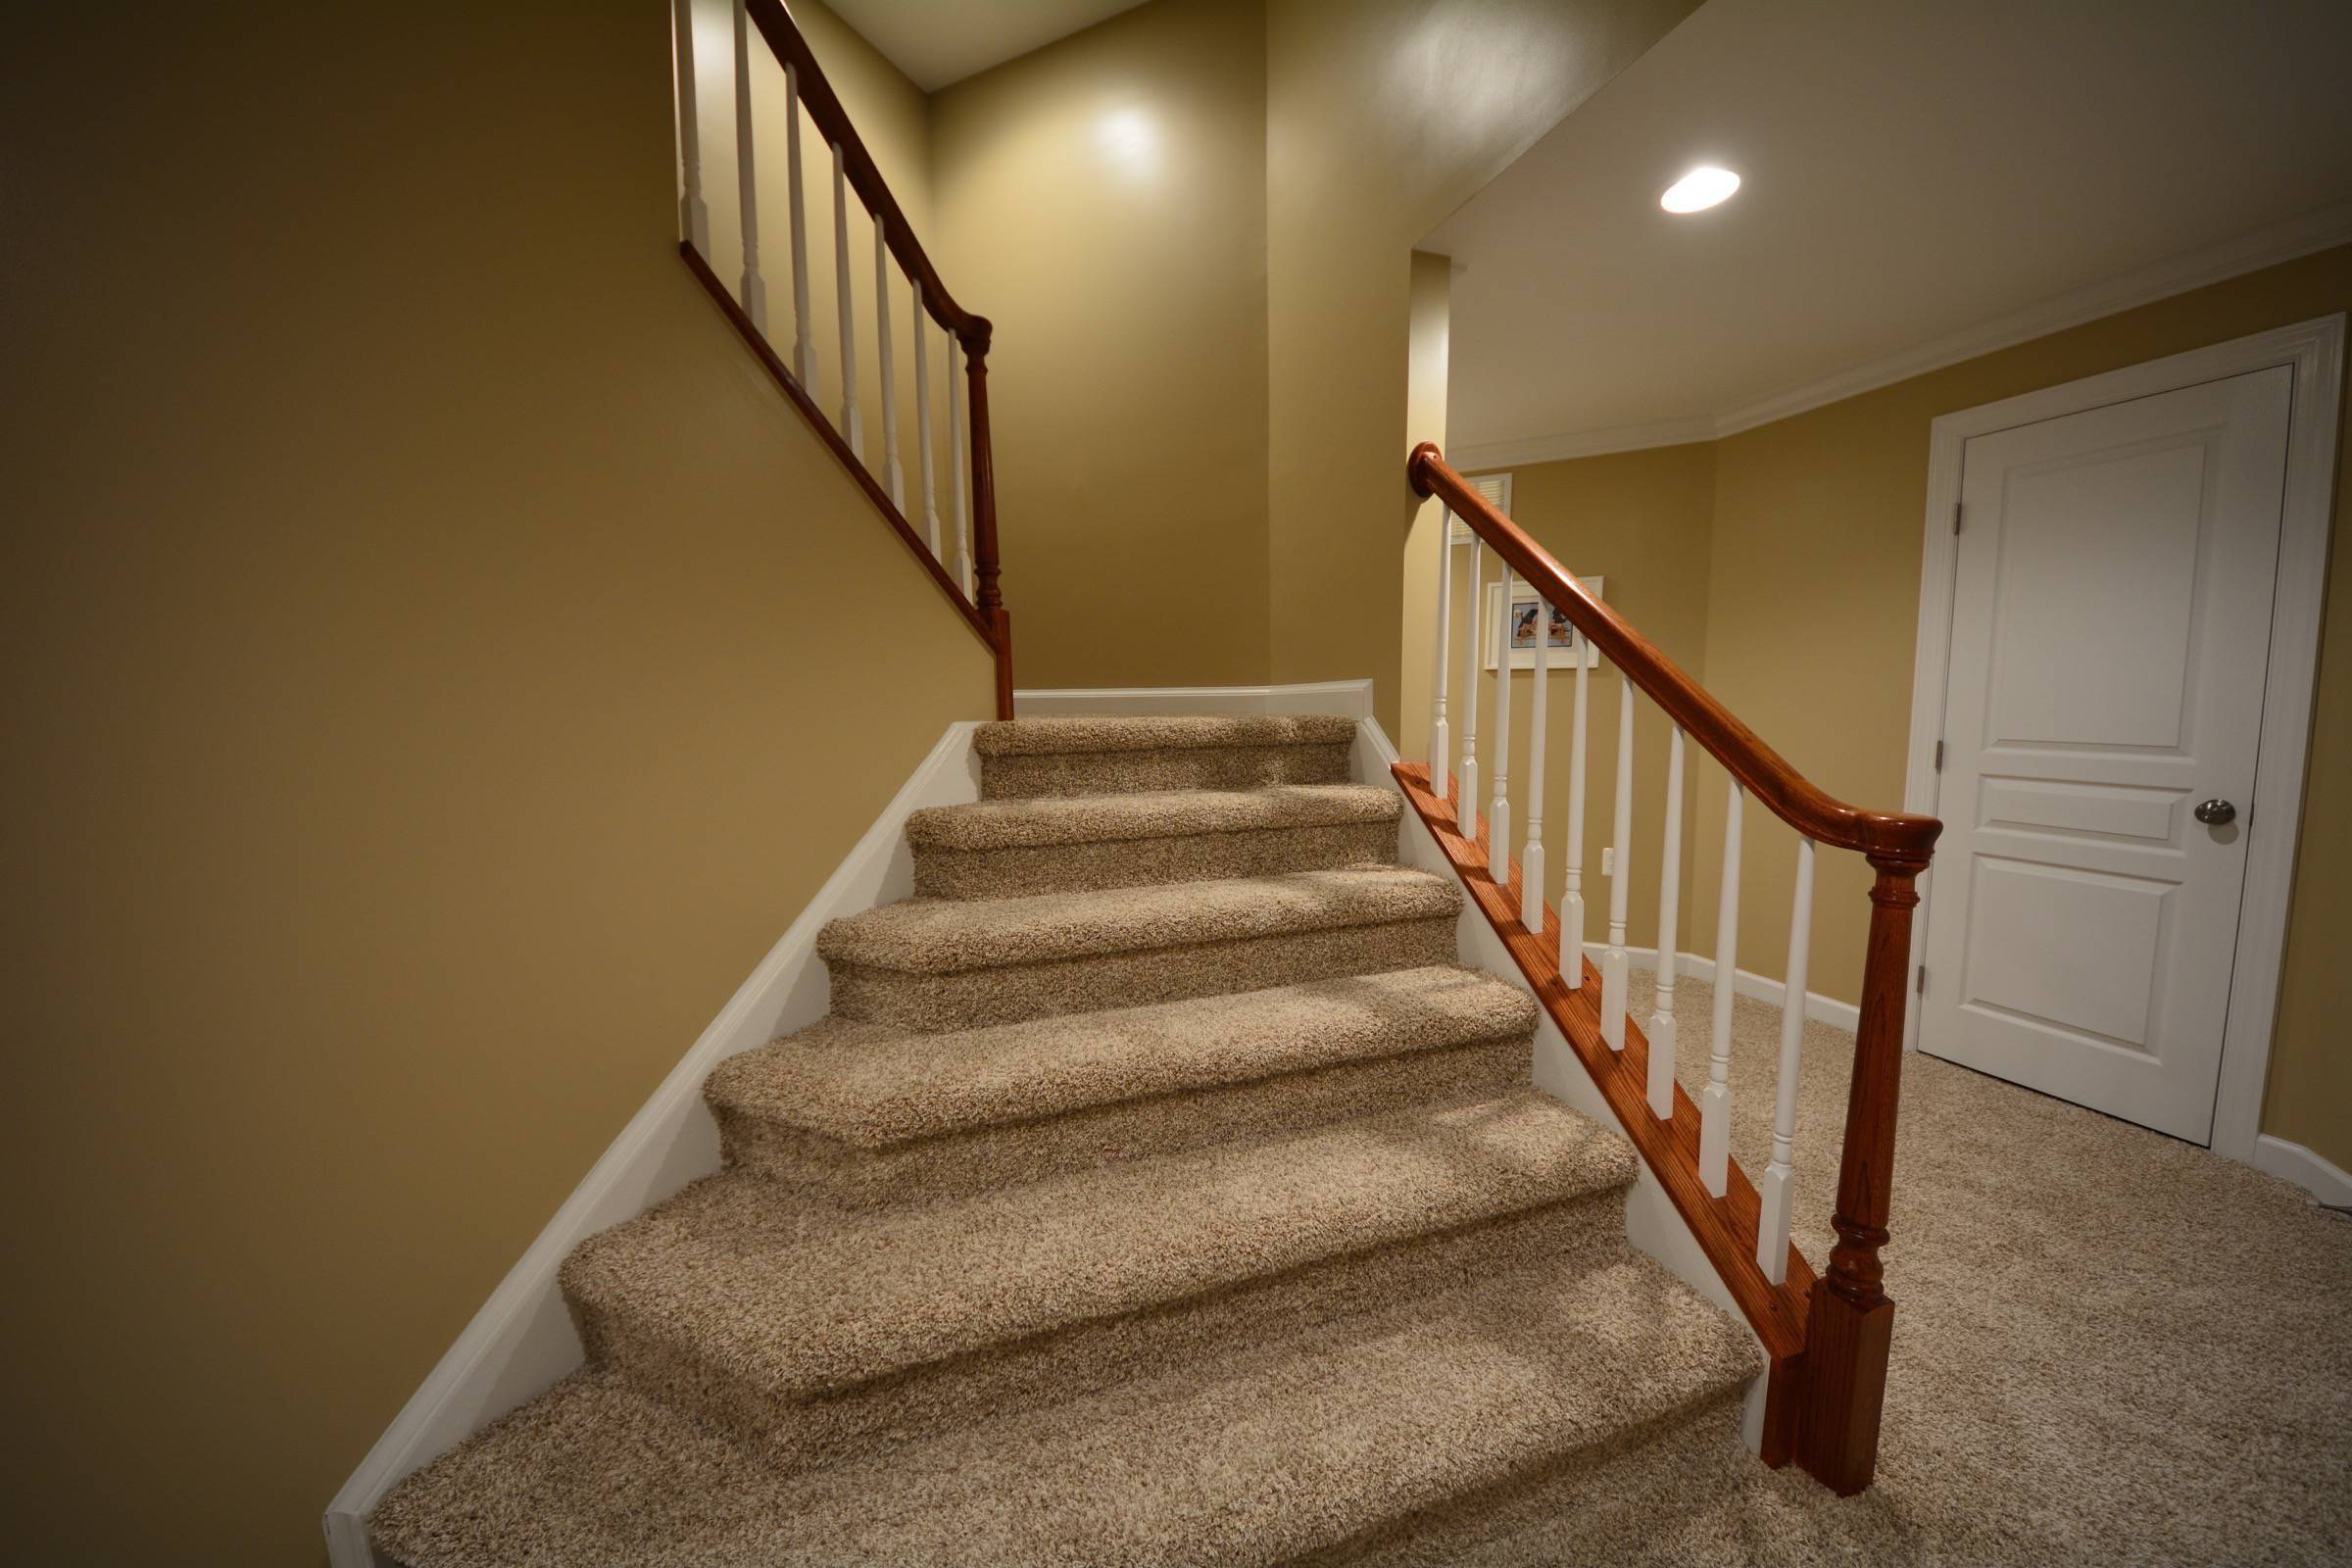 Stair Railings And Half Walls Ideas Basementremodeling